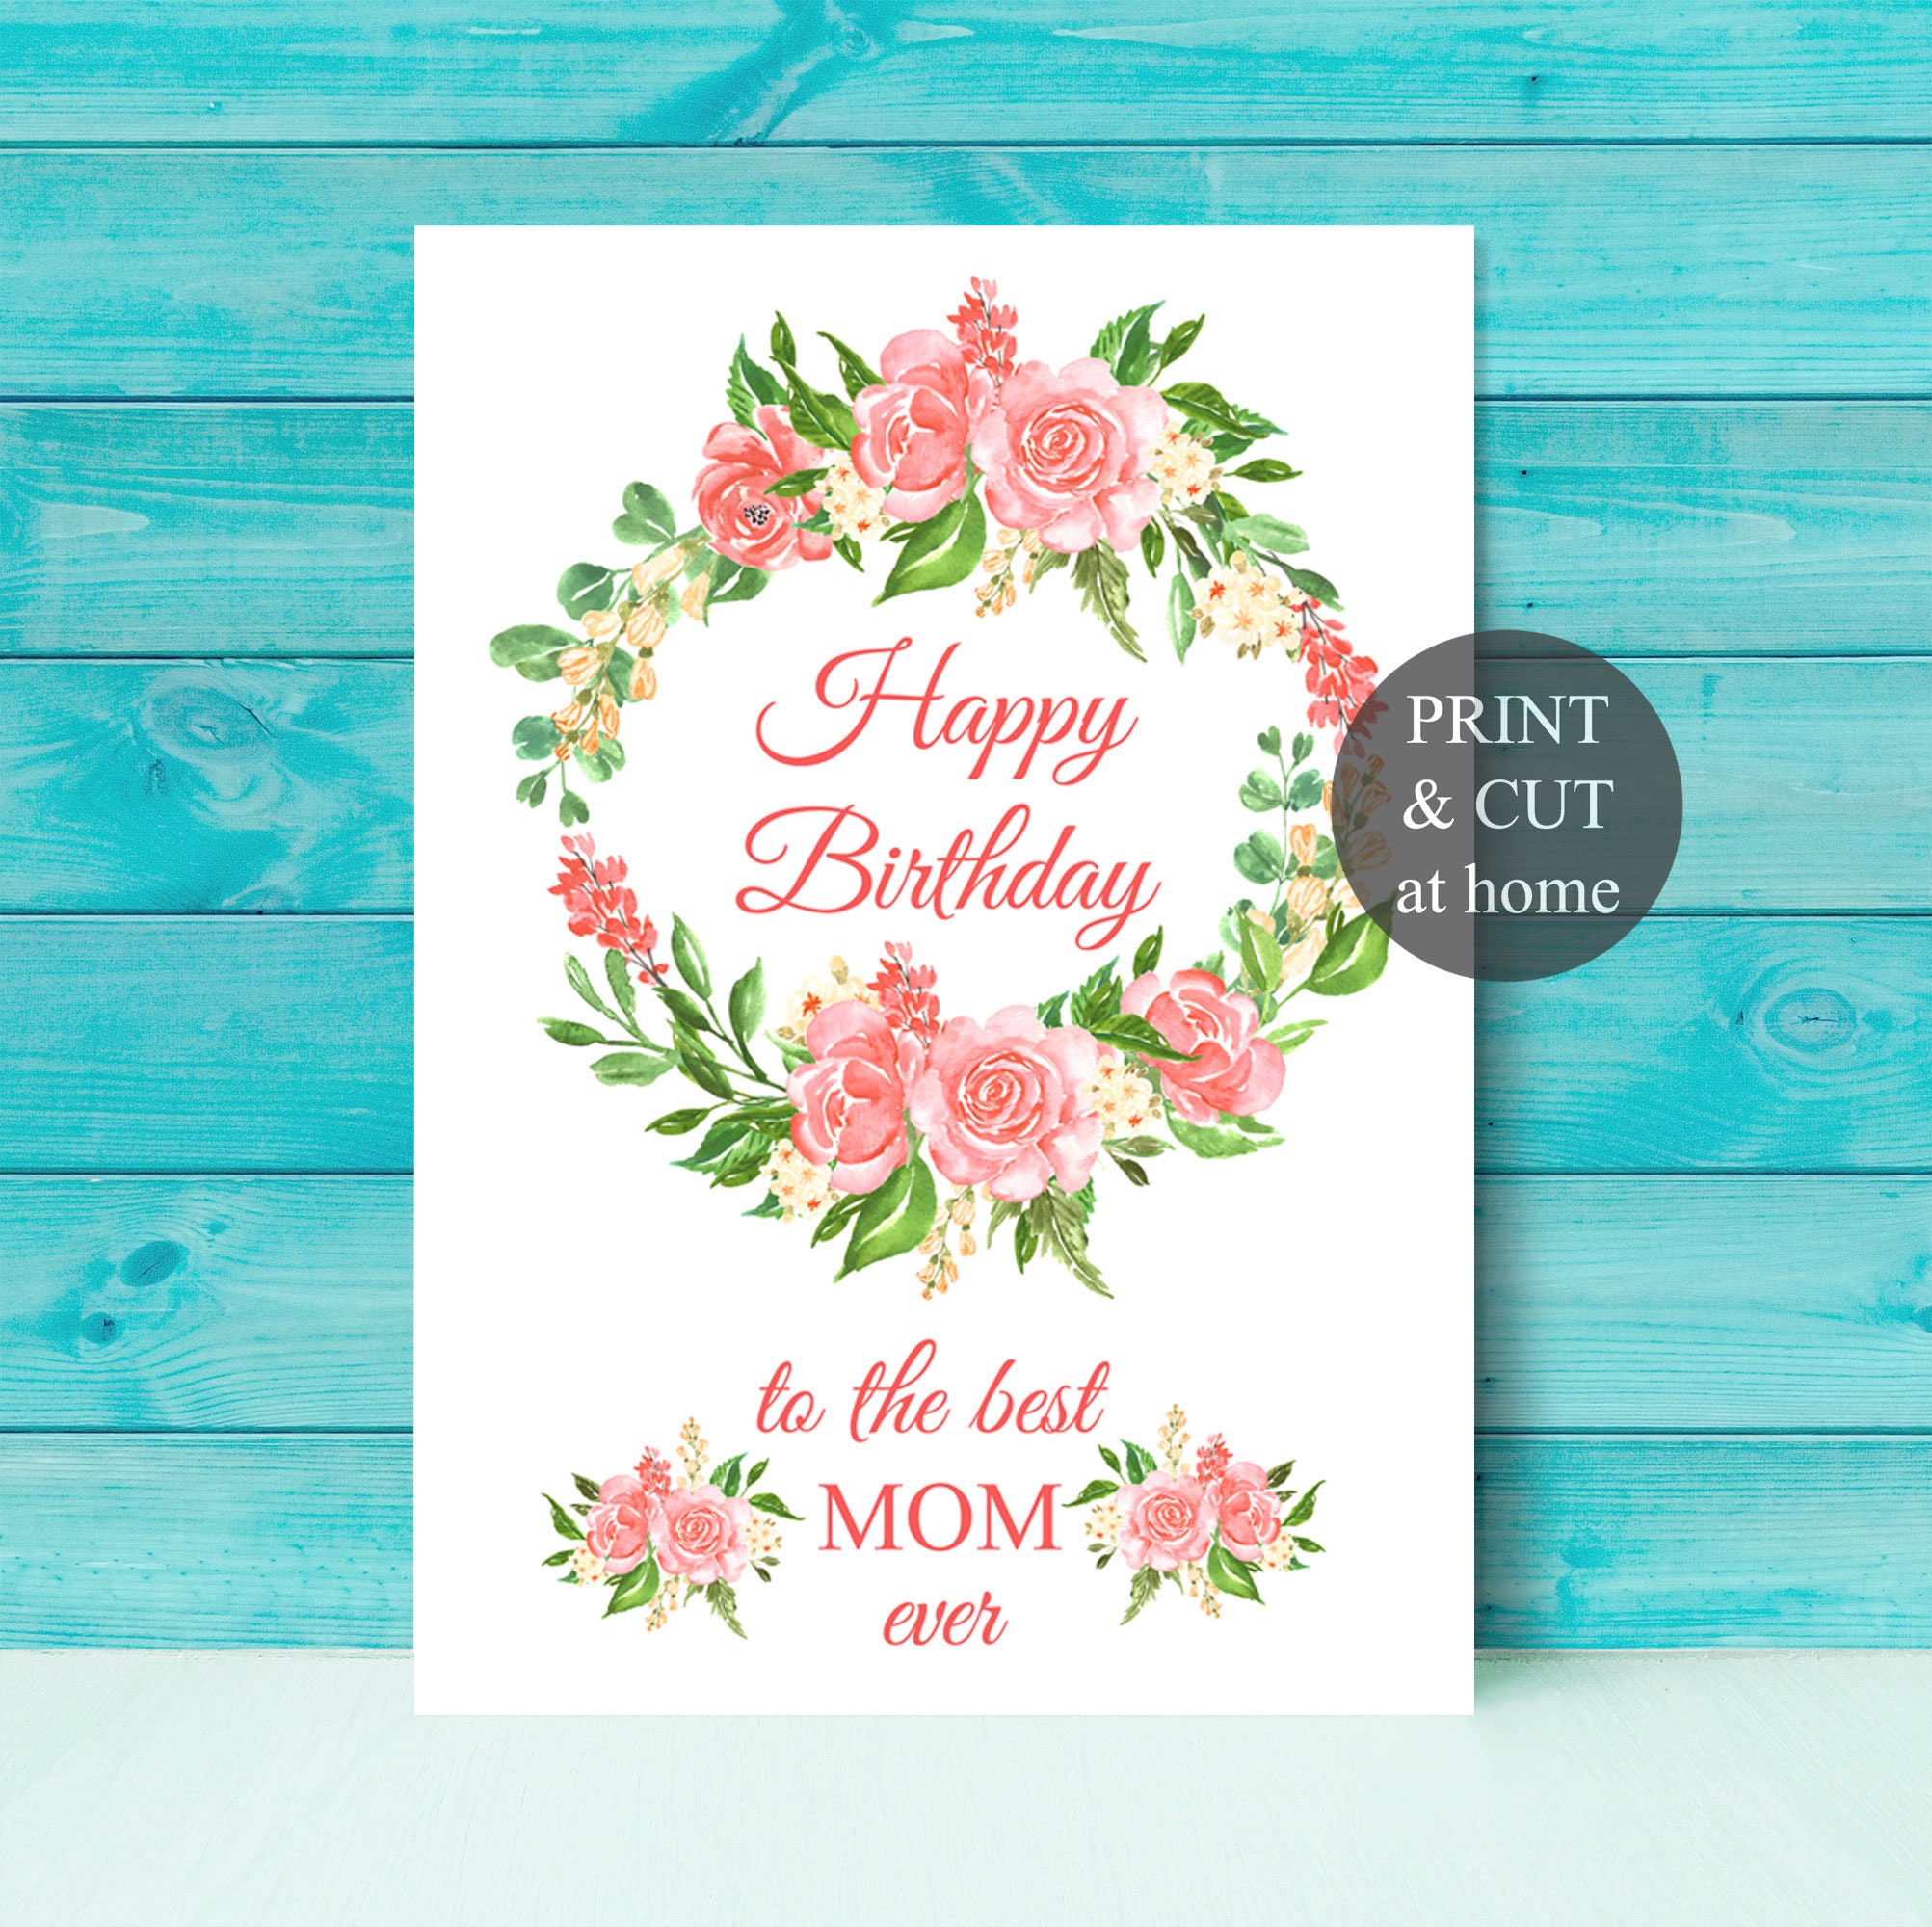 happy-birthday-mom-printable-card-digital-download-birthday-etsy